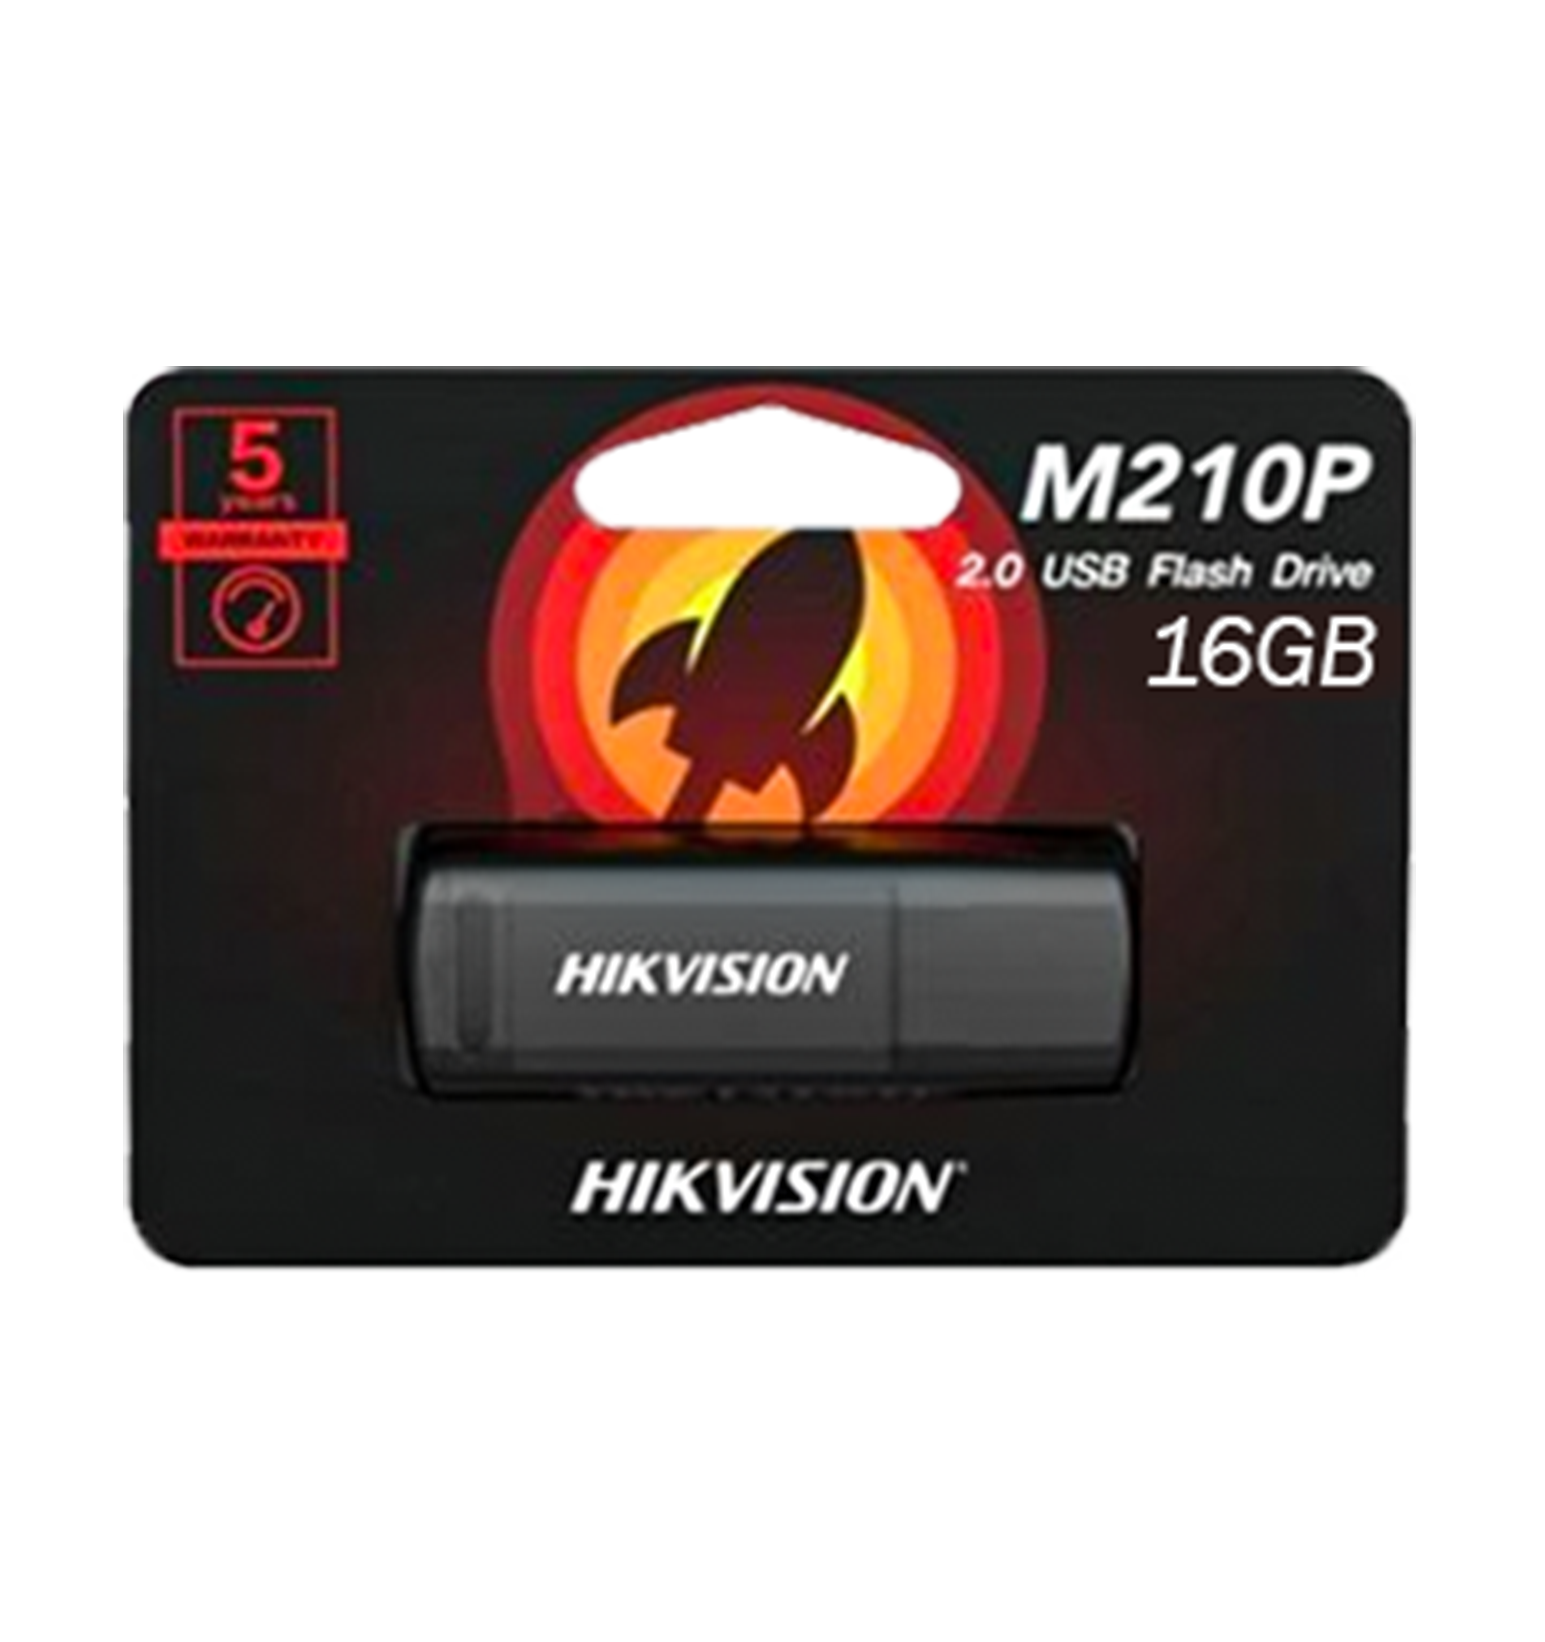 HIKVISION M210P-16GB-2.0 USB Flash Drive